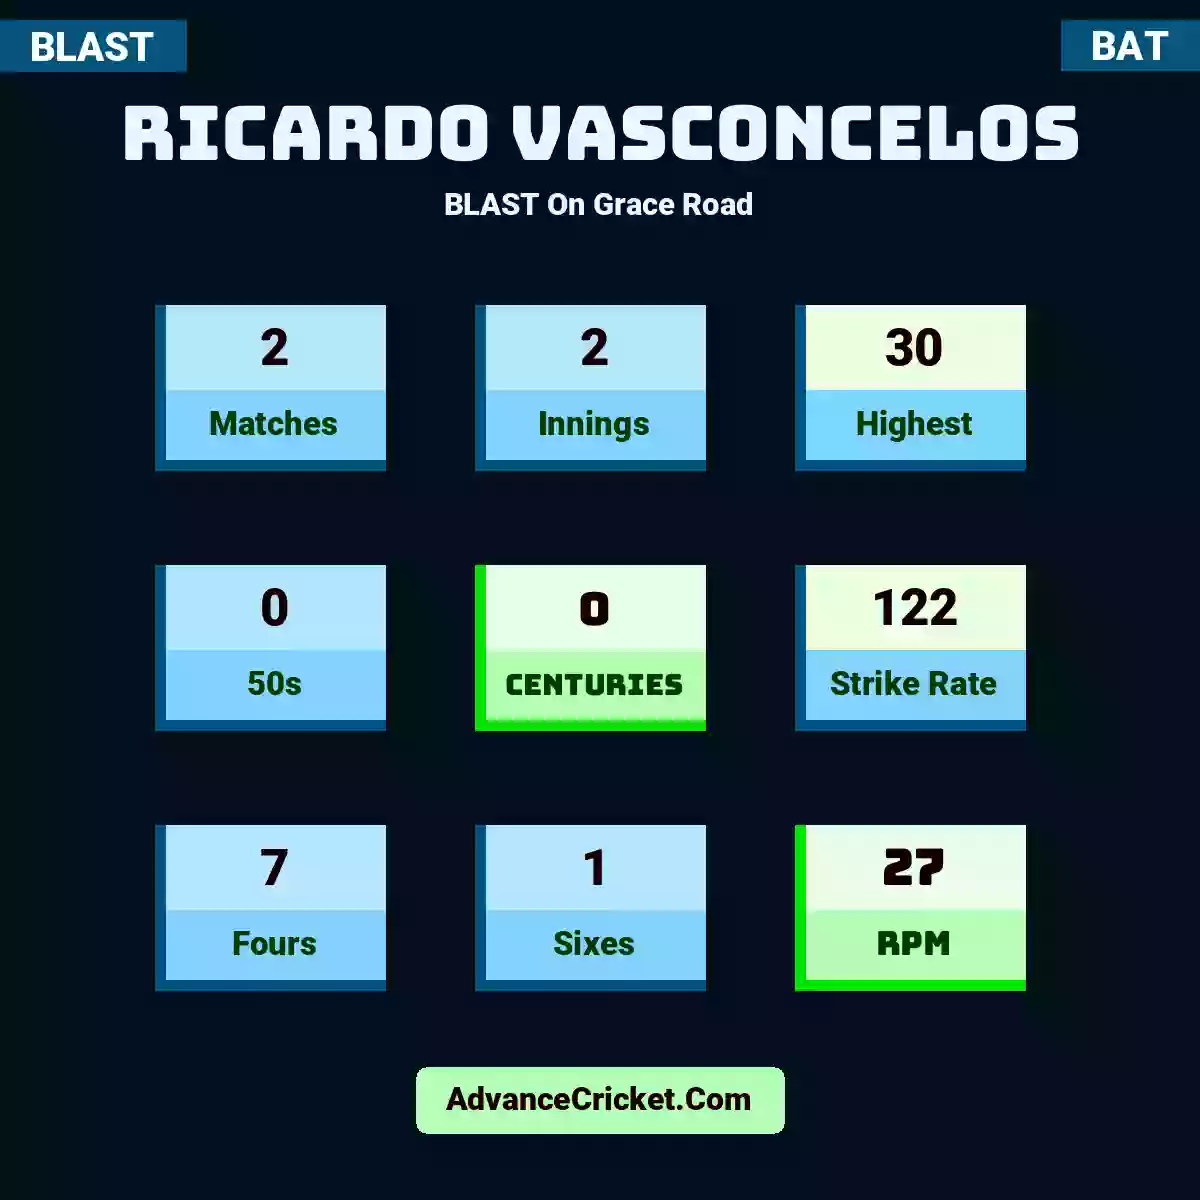 Ricardo Vasconcelos BLAST  On Grace Road, Ricardo Vasconcelos played 2 matches, scored 30 runs as highest, 0 half-centuries, and 0 centuries, with a strike rate of 122. R.Vasconcelos hit 7 fours and 1 sixes, with an RPM of 27.